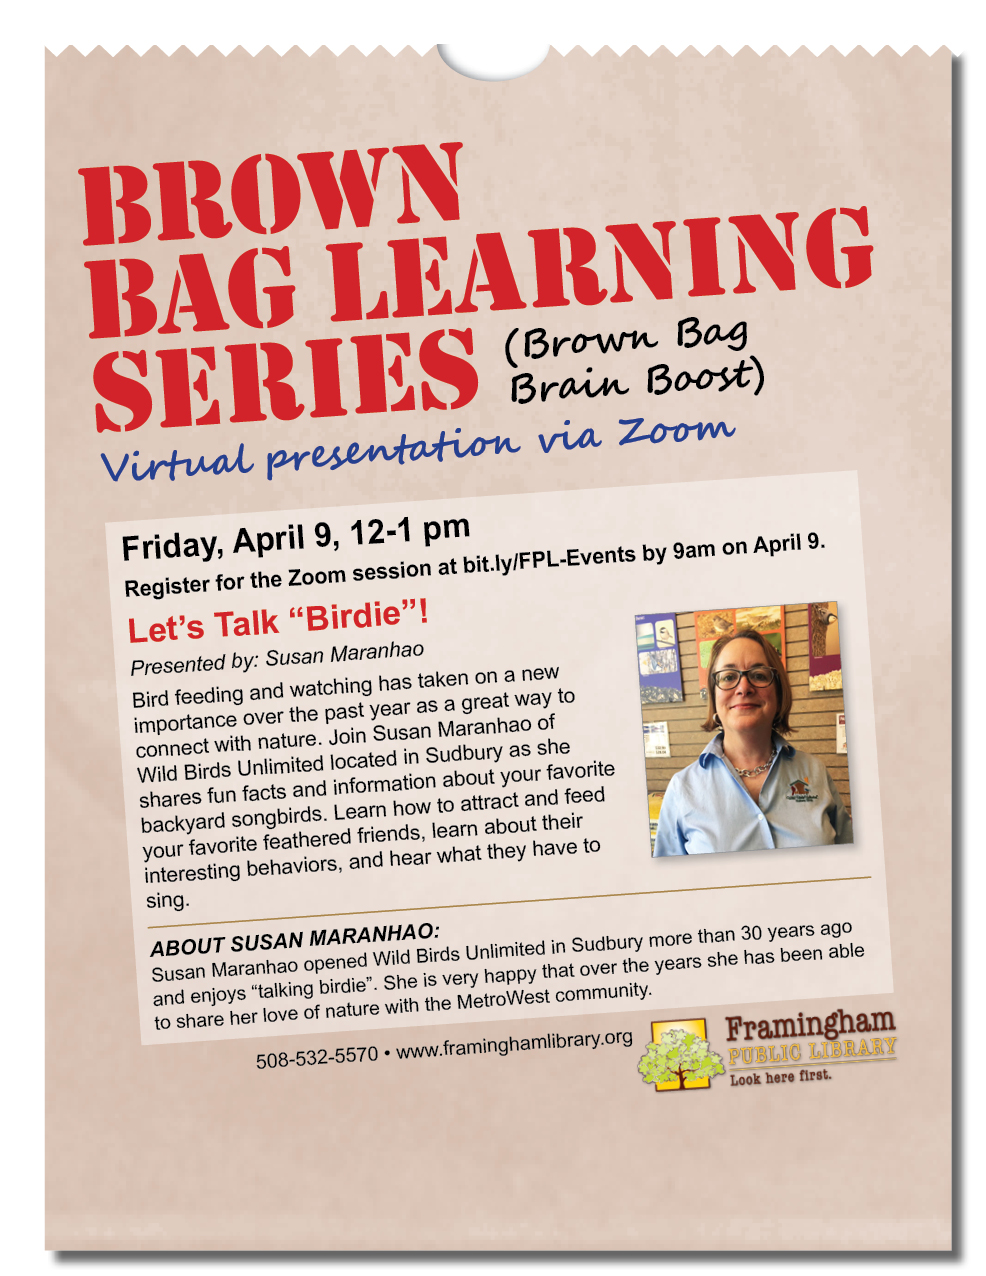 Brown Bag Learning Series: Let’s Talk “Birdie”! thumbnail Photo